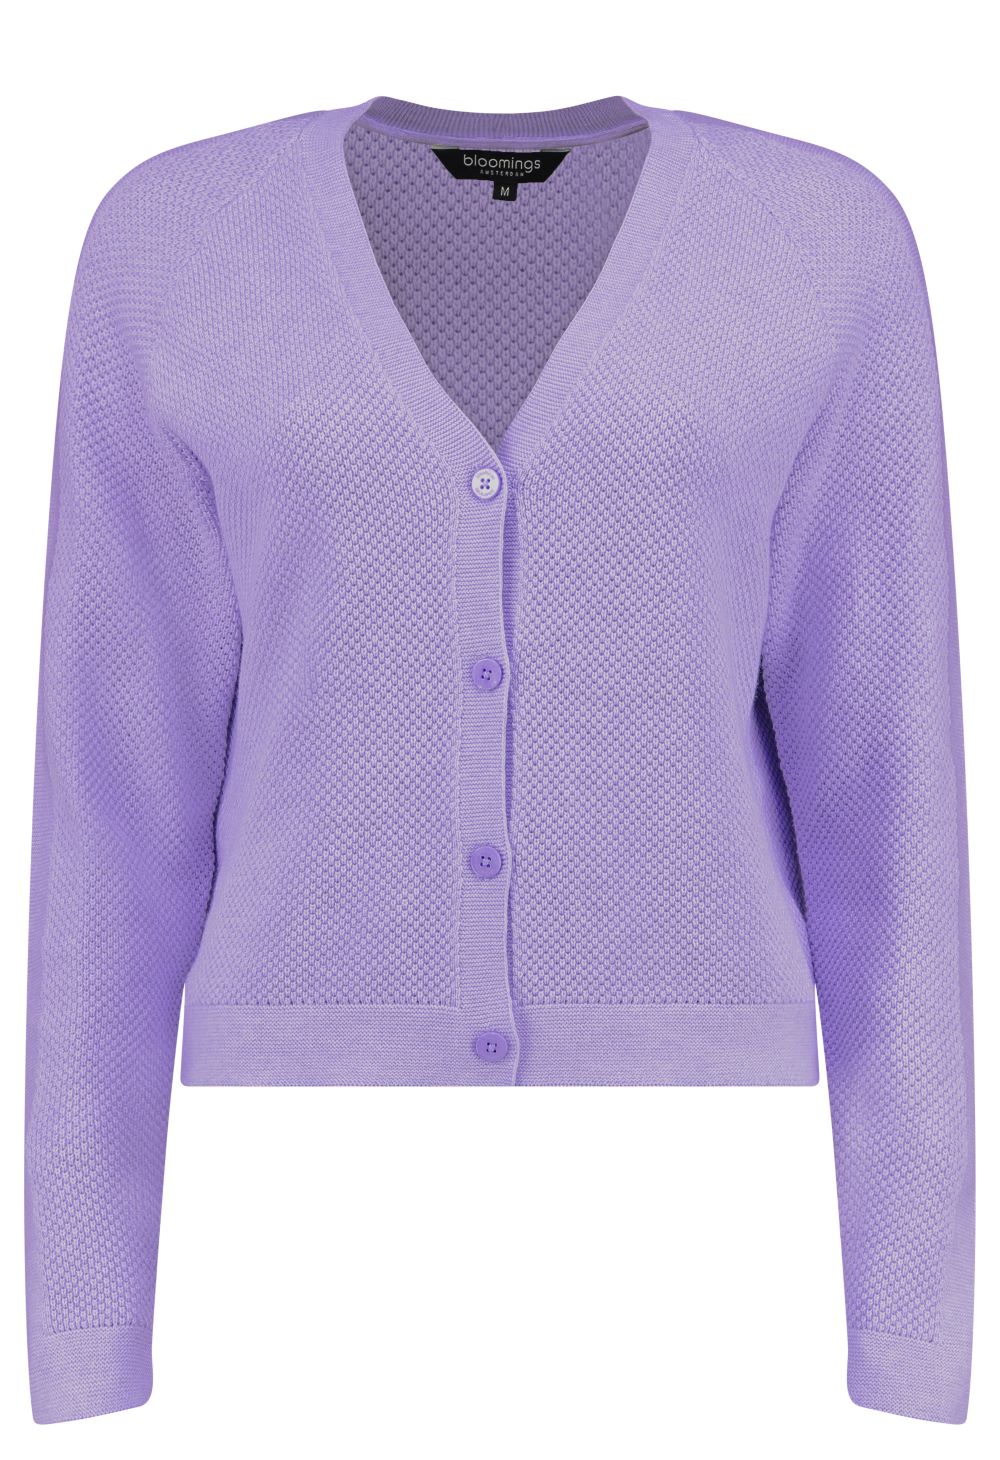 Bloomings V-neck cardigan SLK20-8377 596U Purple